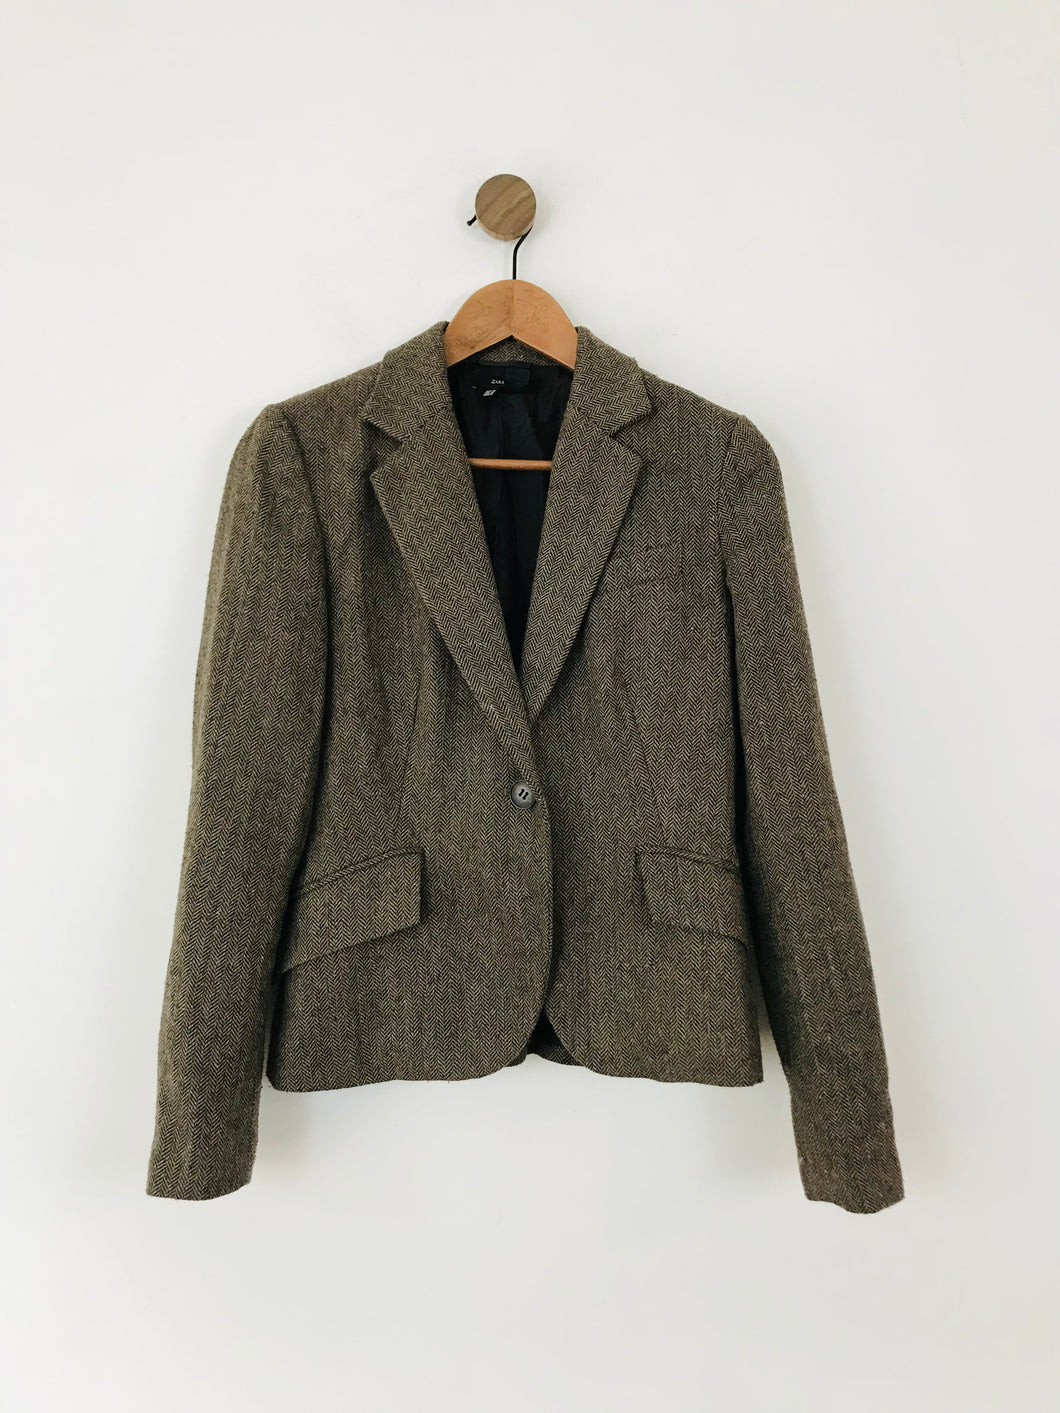 Zara Women's Faux Tweed Blazer Jacket | M UK10-12 | Brown